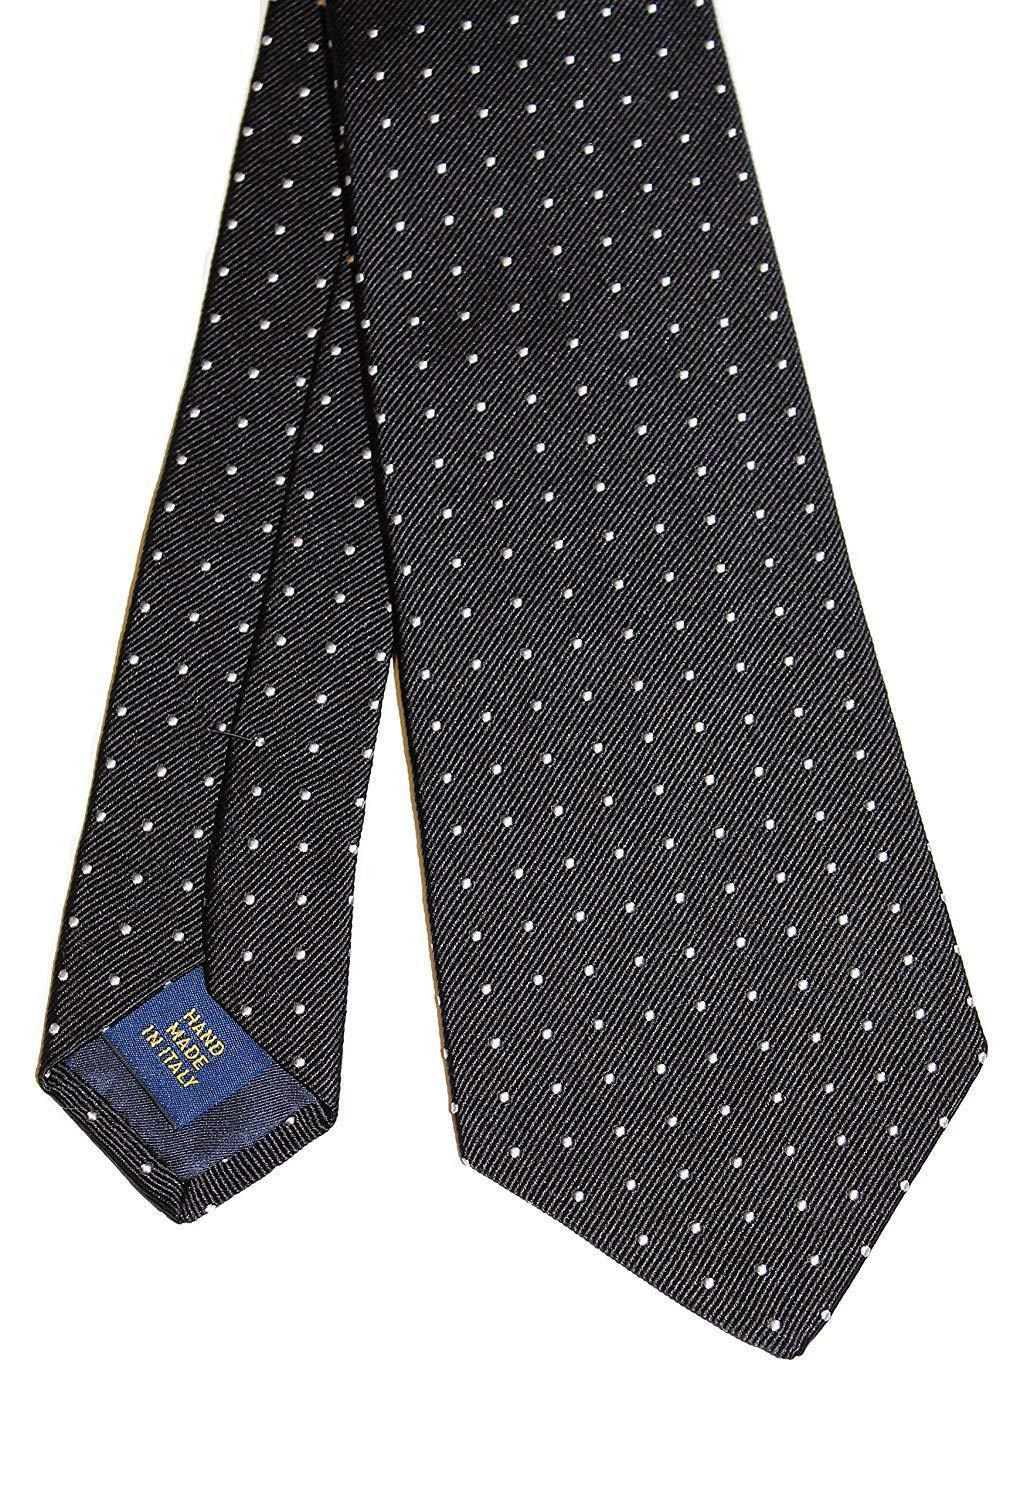 New Polo Ralph Lauren Men's Polka Dot Neck Tie BLACK $125 100% Silk - $59.83